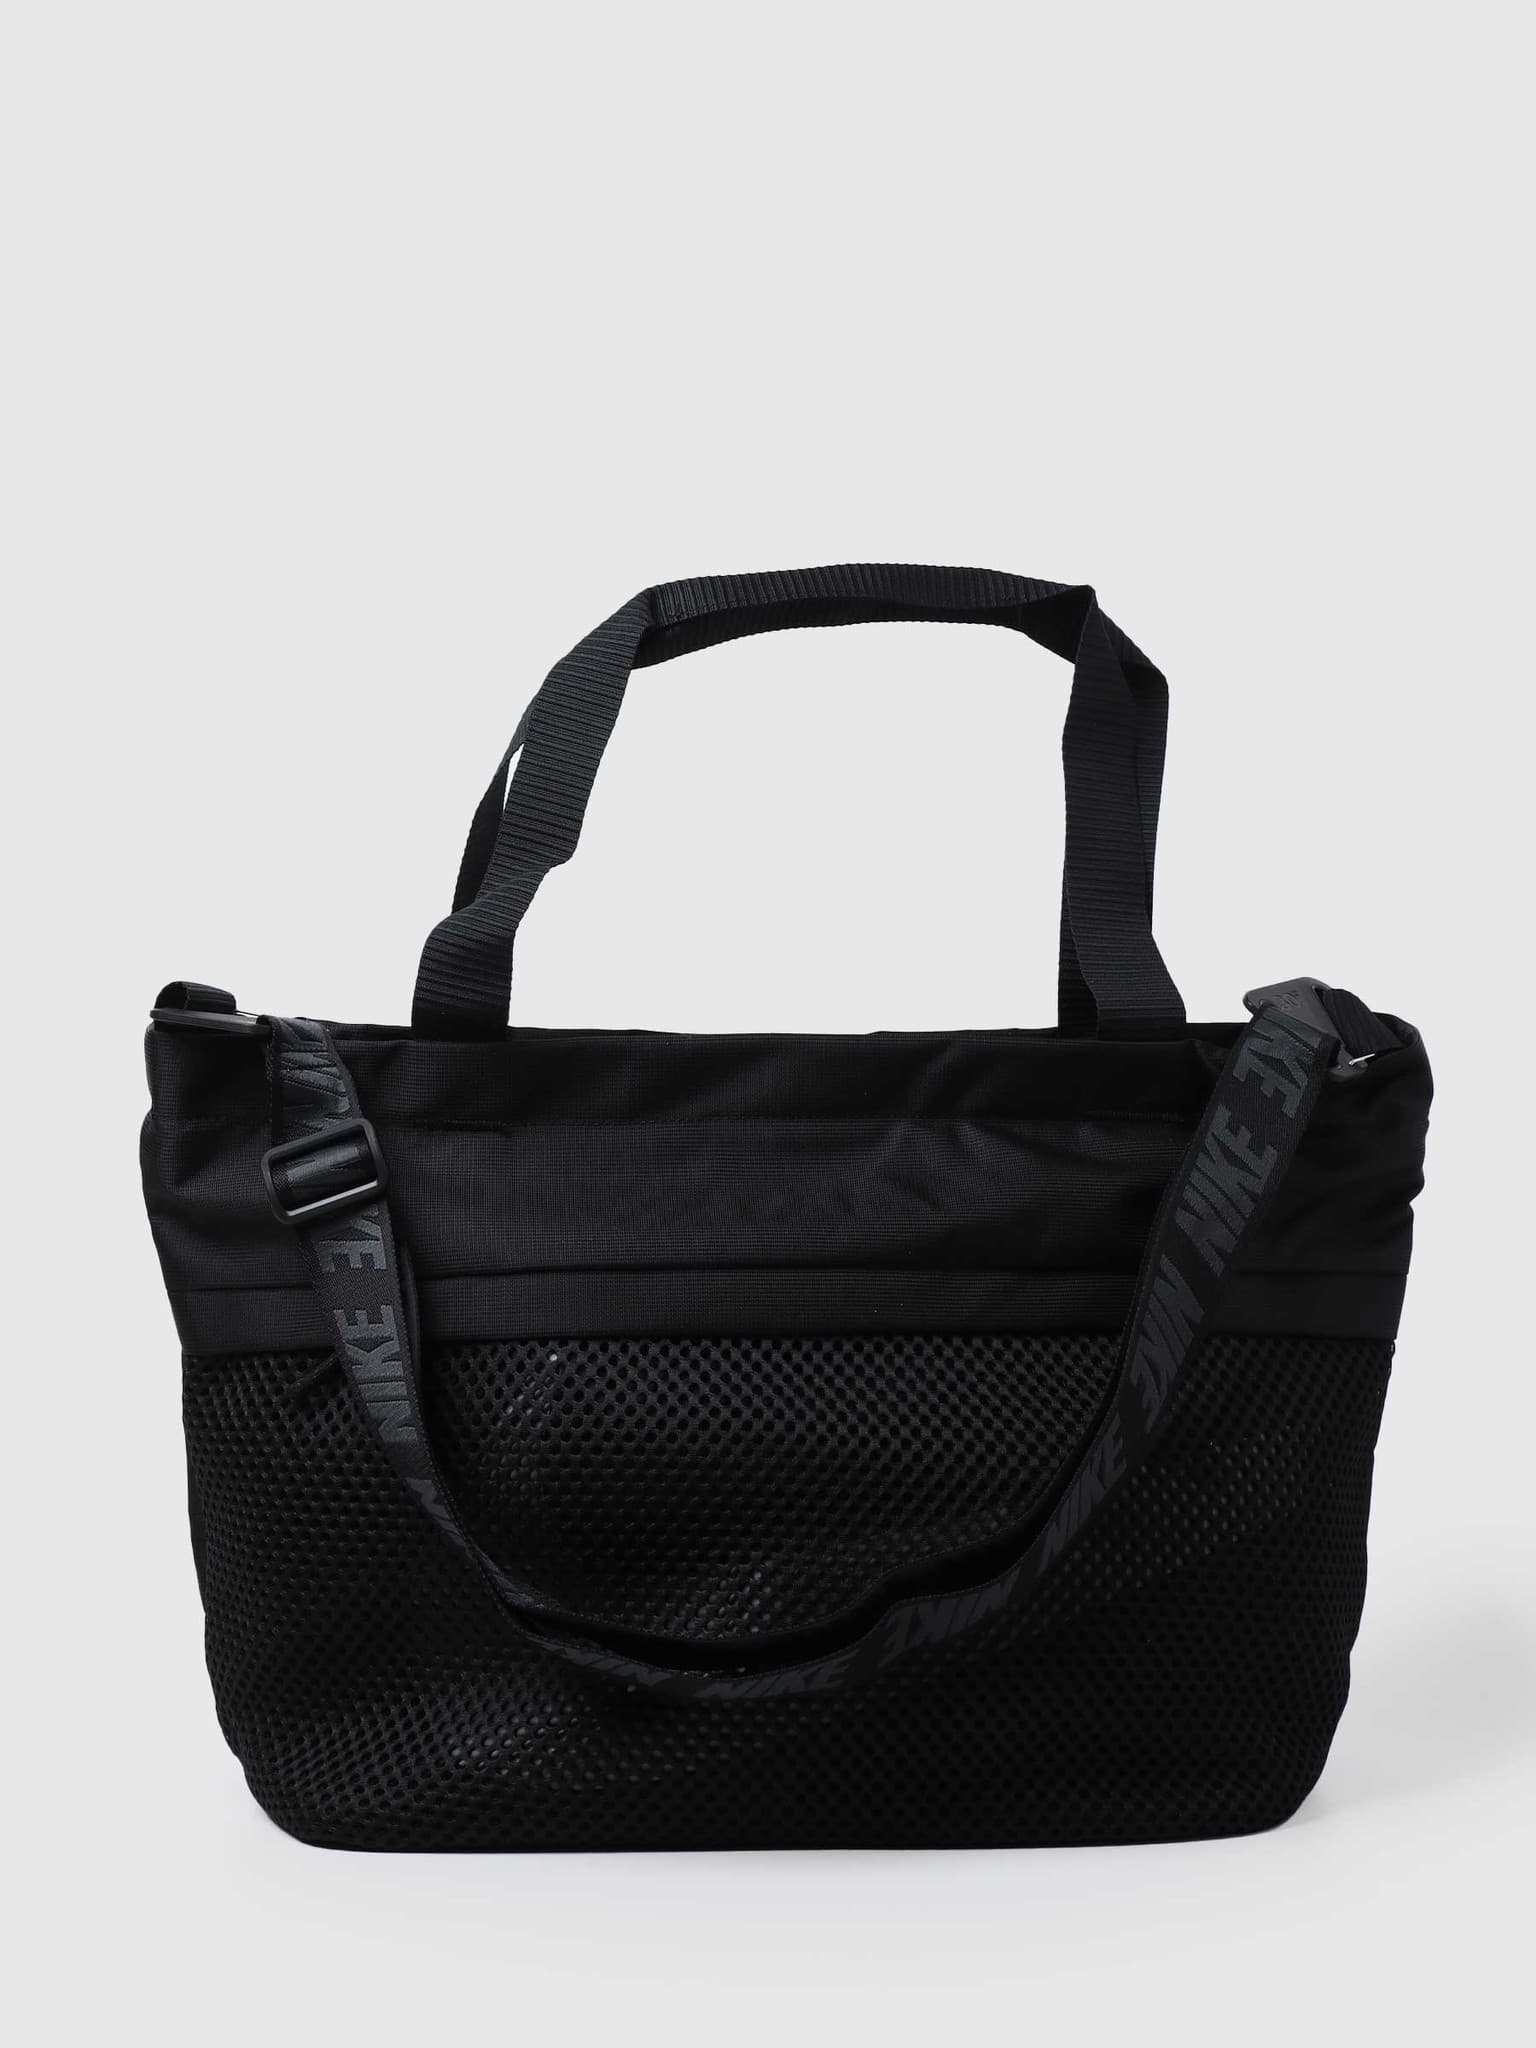 NSW Essentials Tote Bag Black Smoke Grey BA6142-011